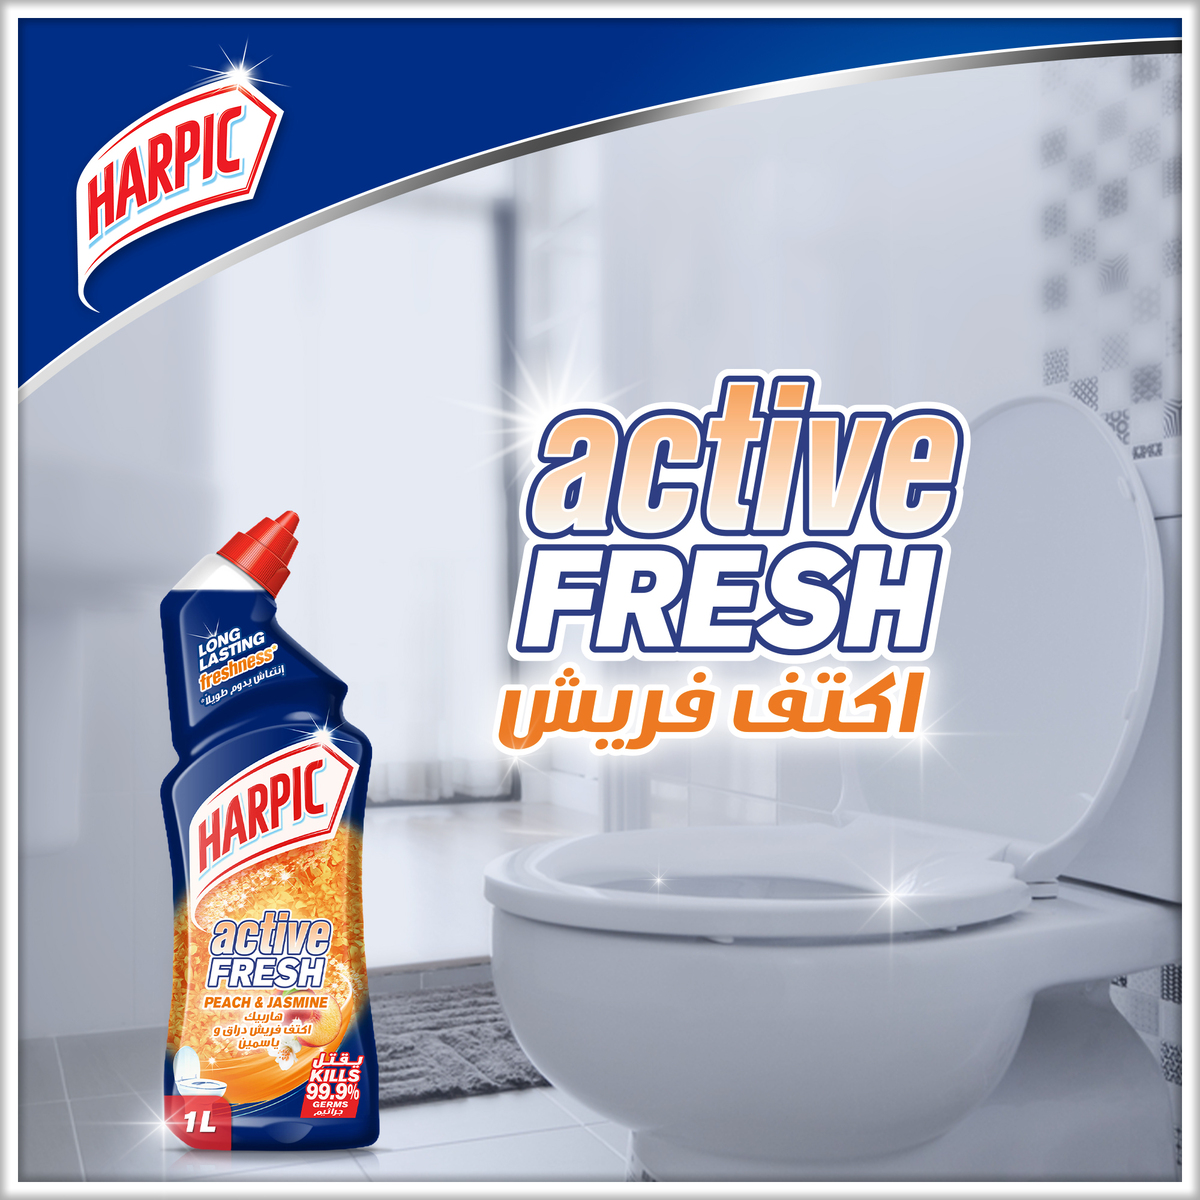 Harpic Peach & Jasmine Active Fresh Toilet Cleaner 1 Litre